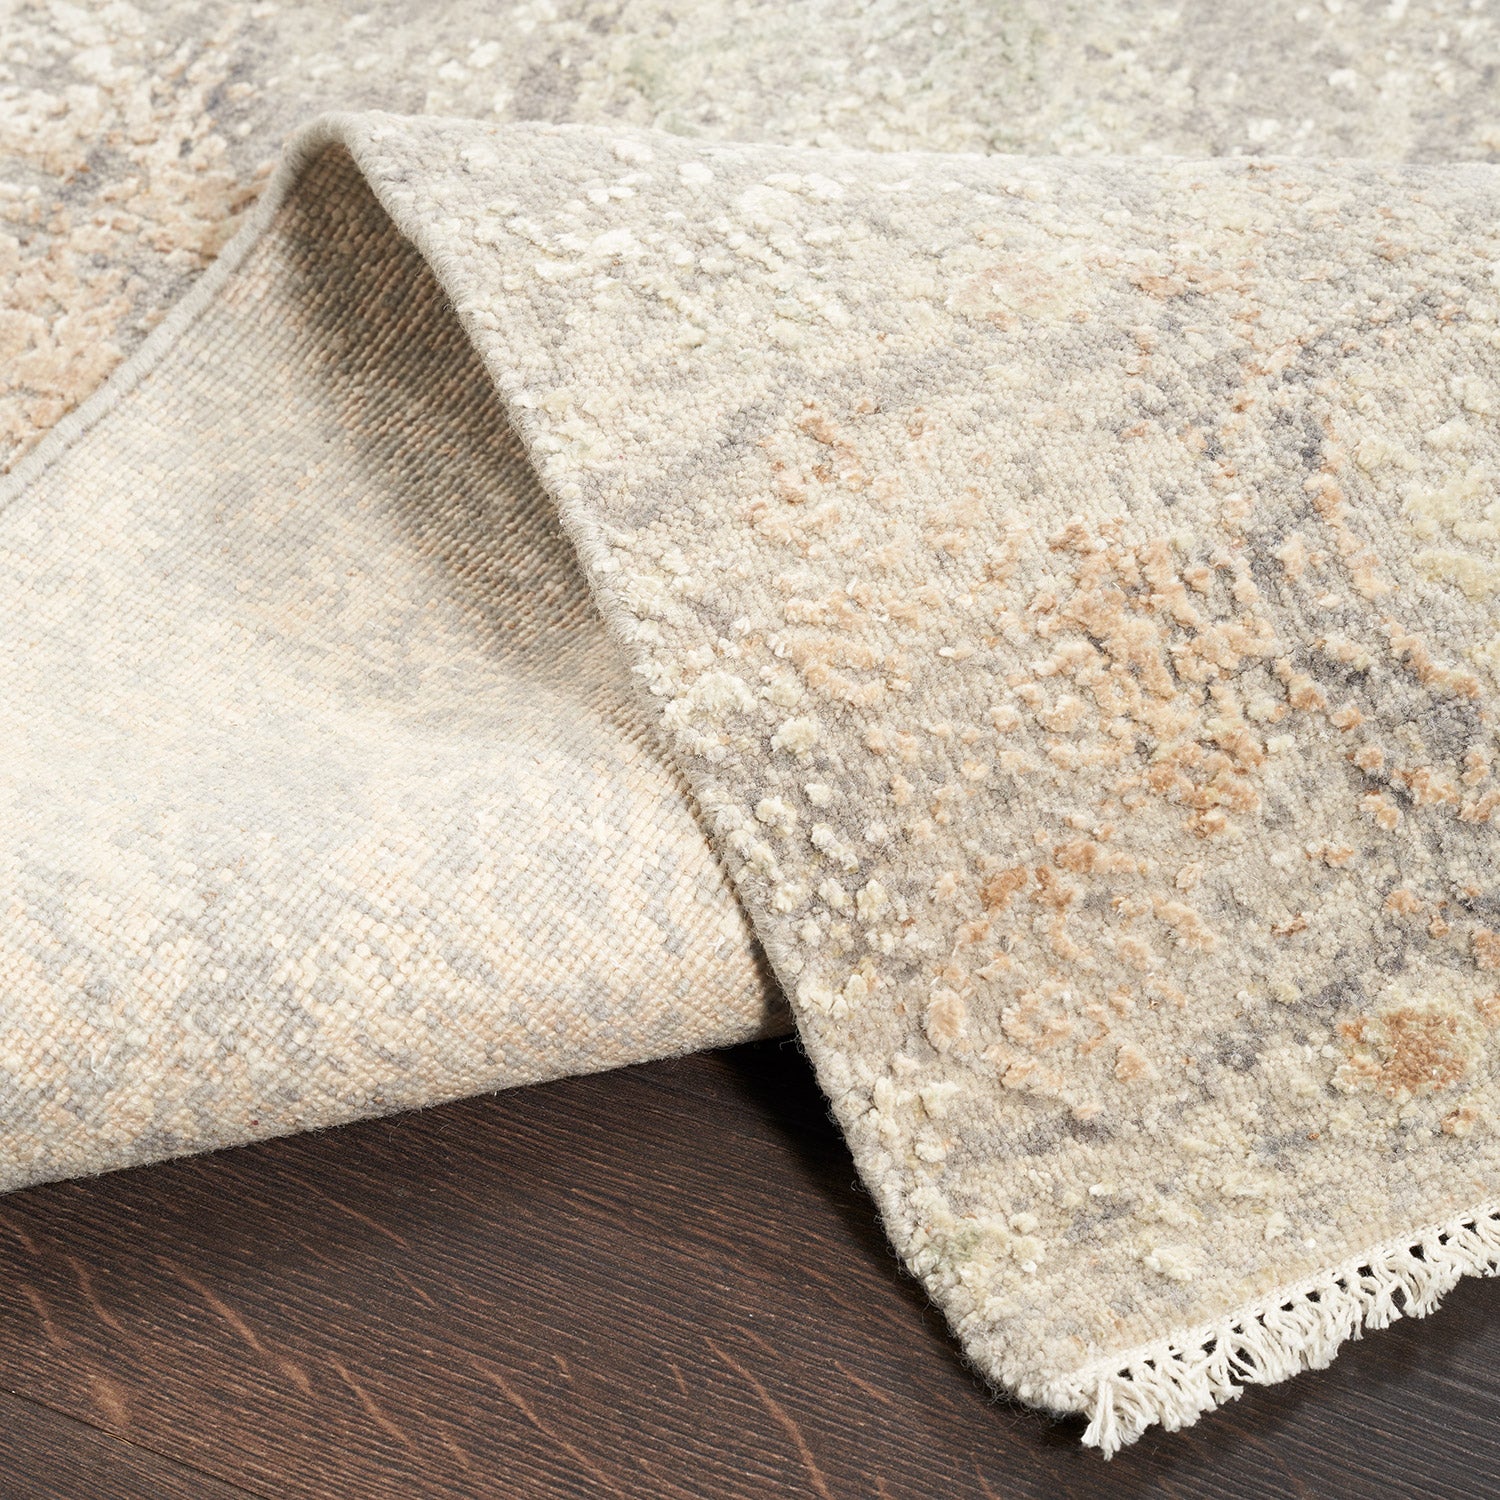 Close-up of a folded corner of plush, patterned carpet on hardwood floor.